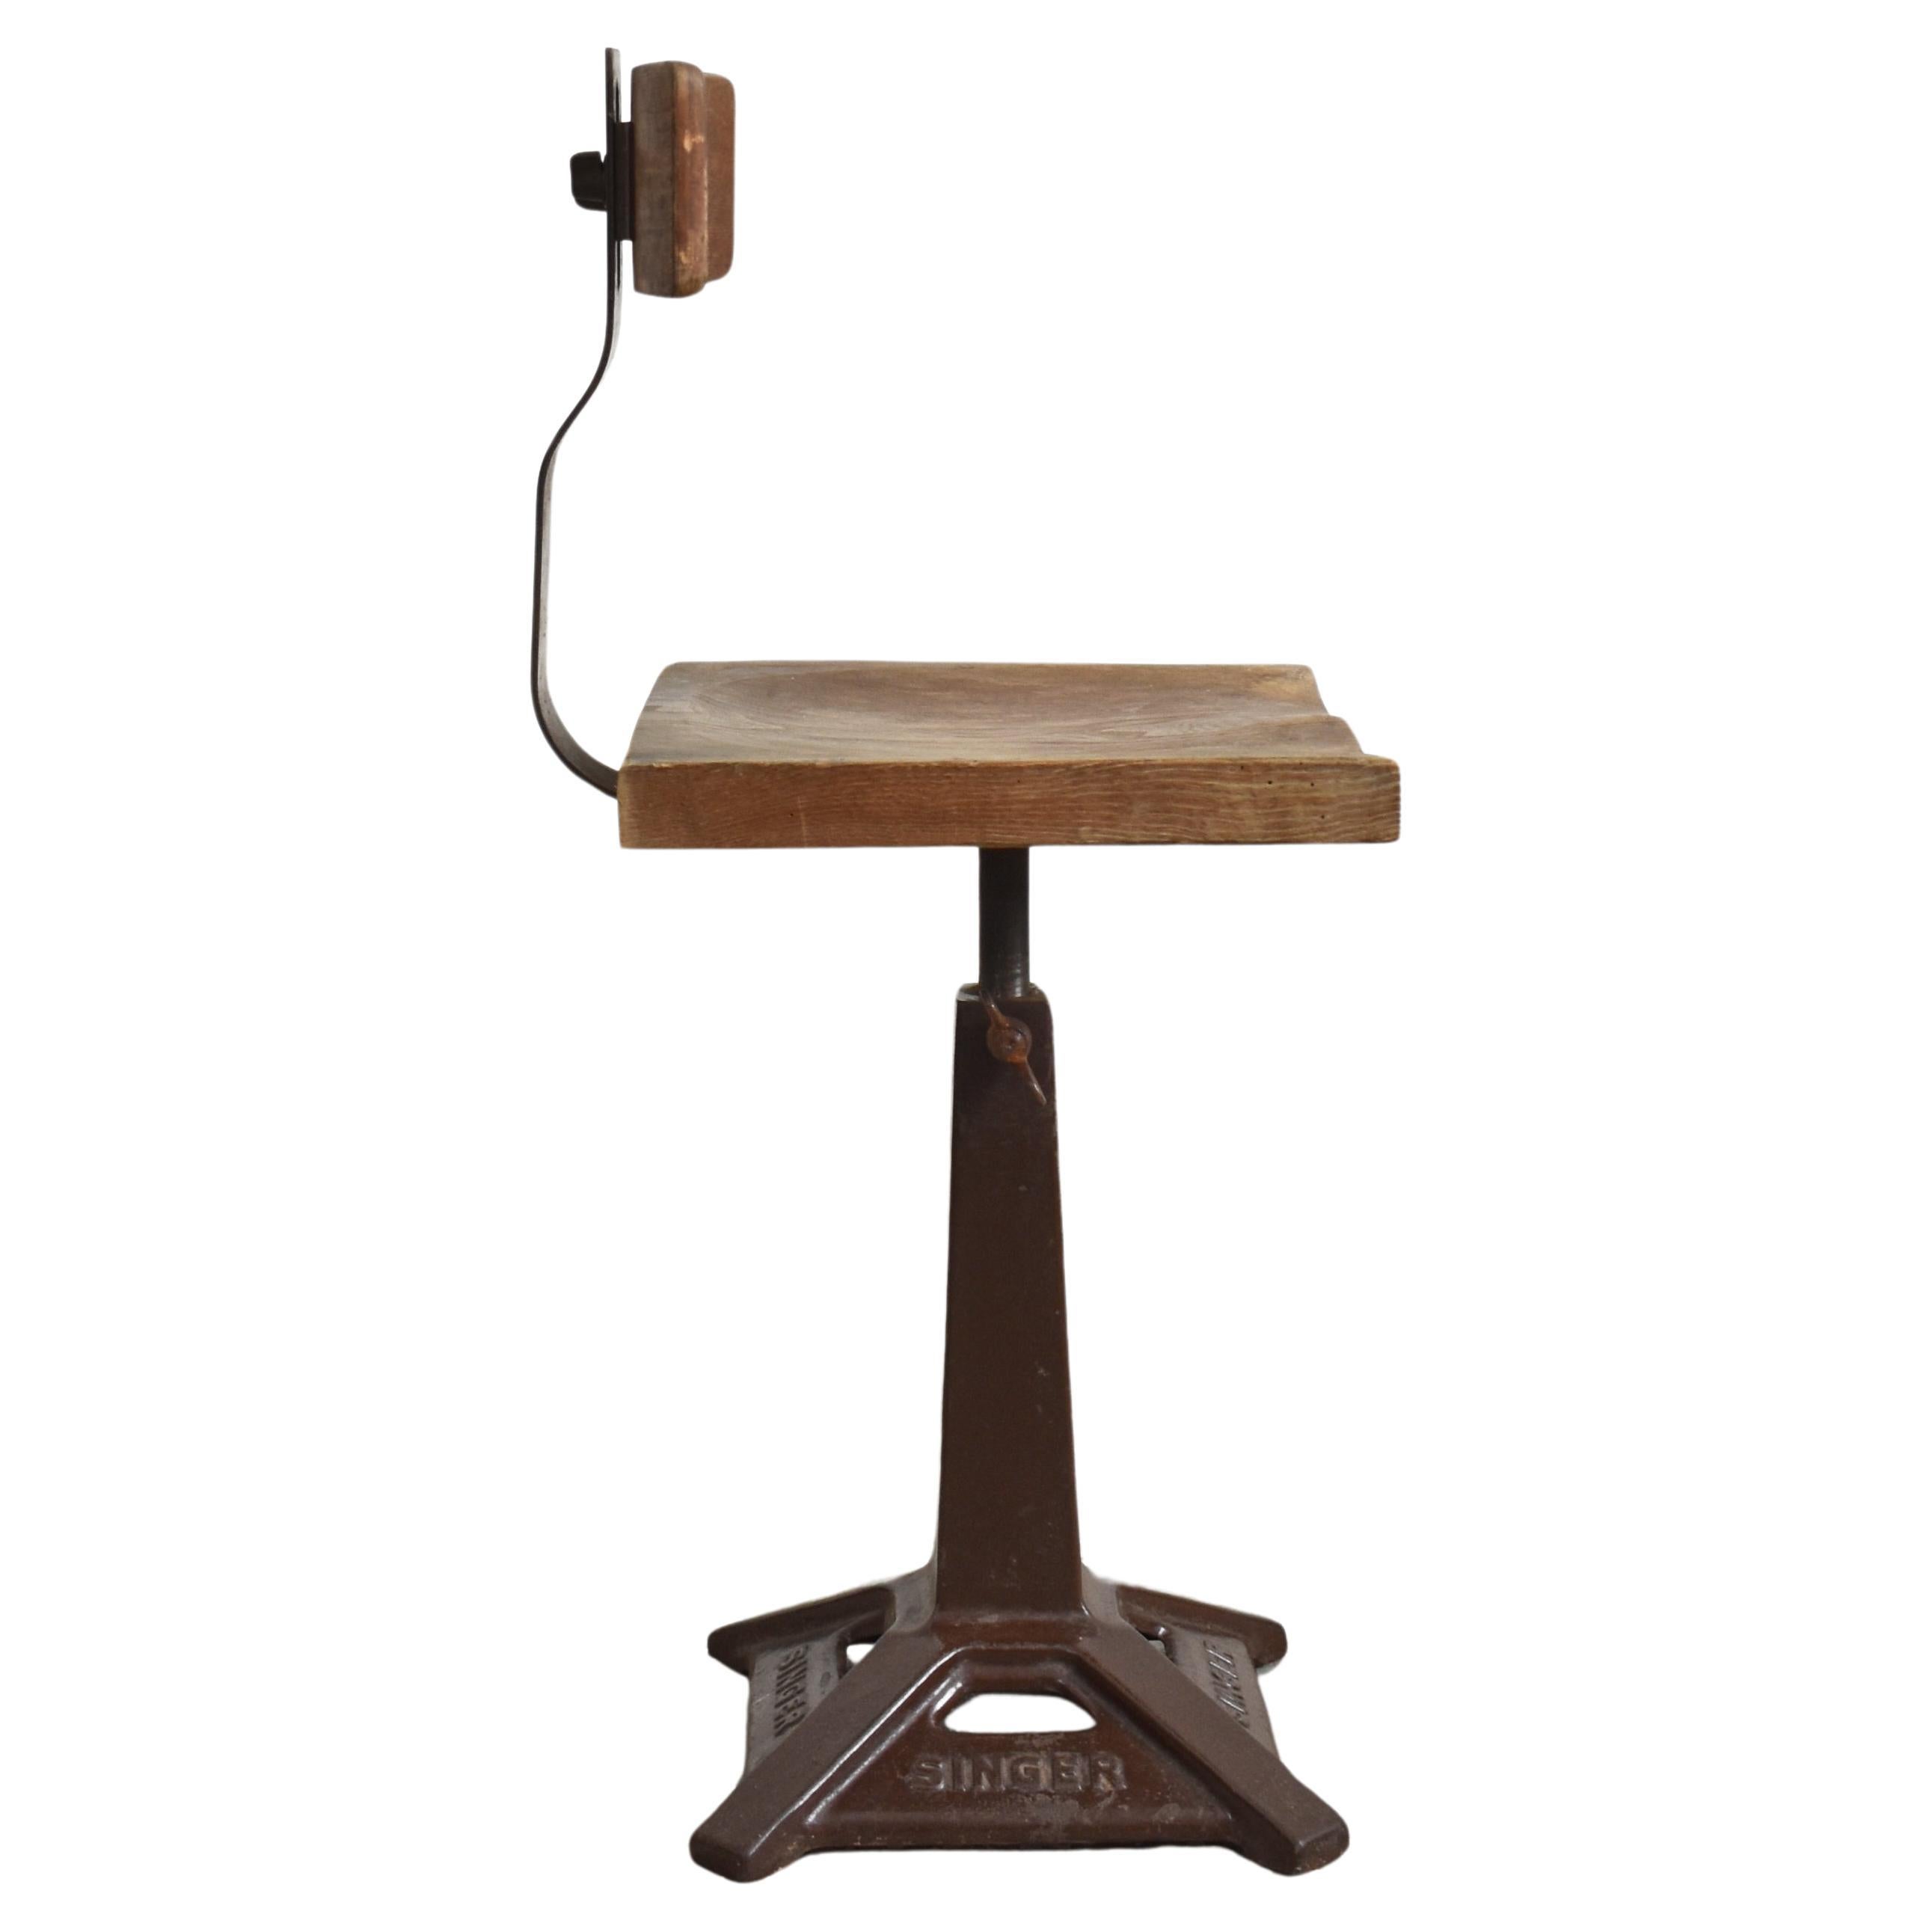 Original Antique English Vintage Singer Desk Swivel Chair For Sale